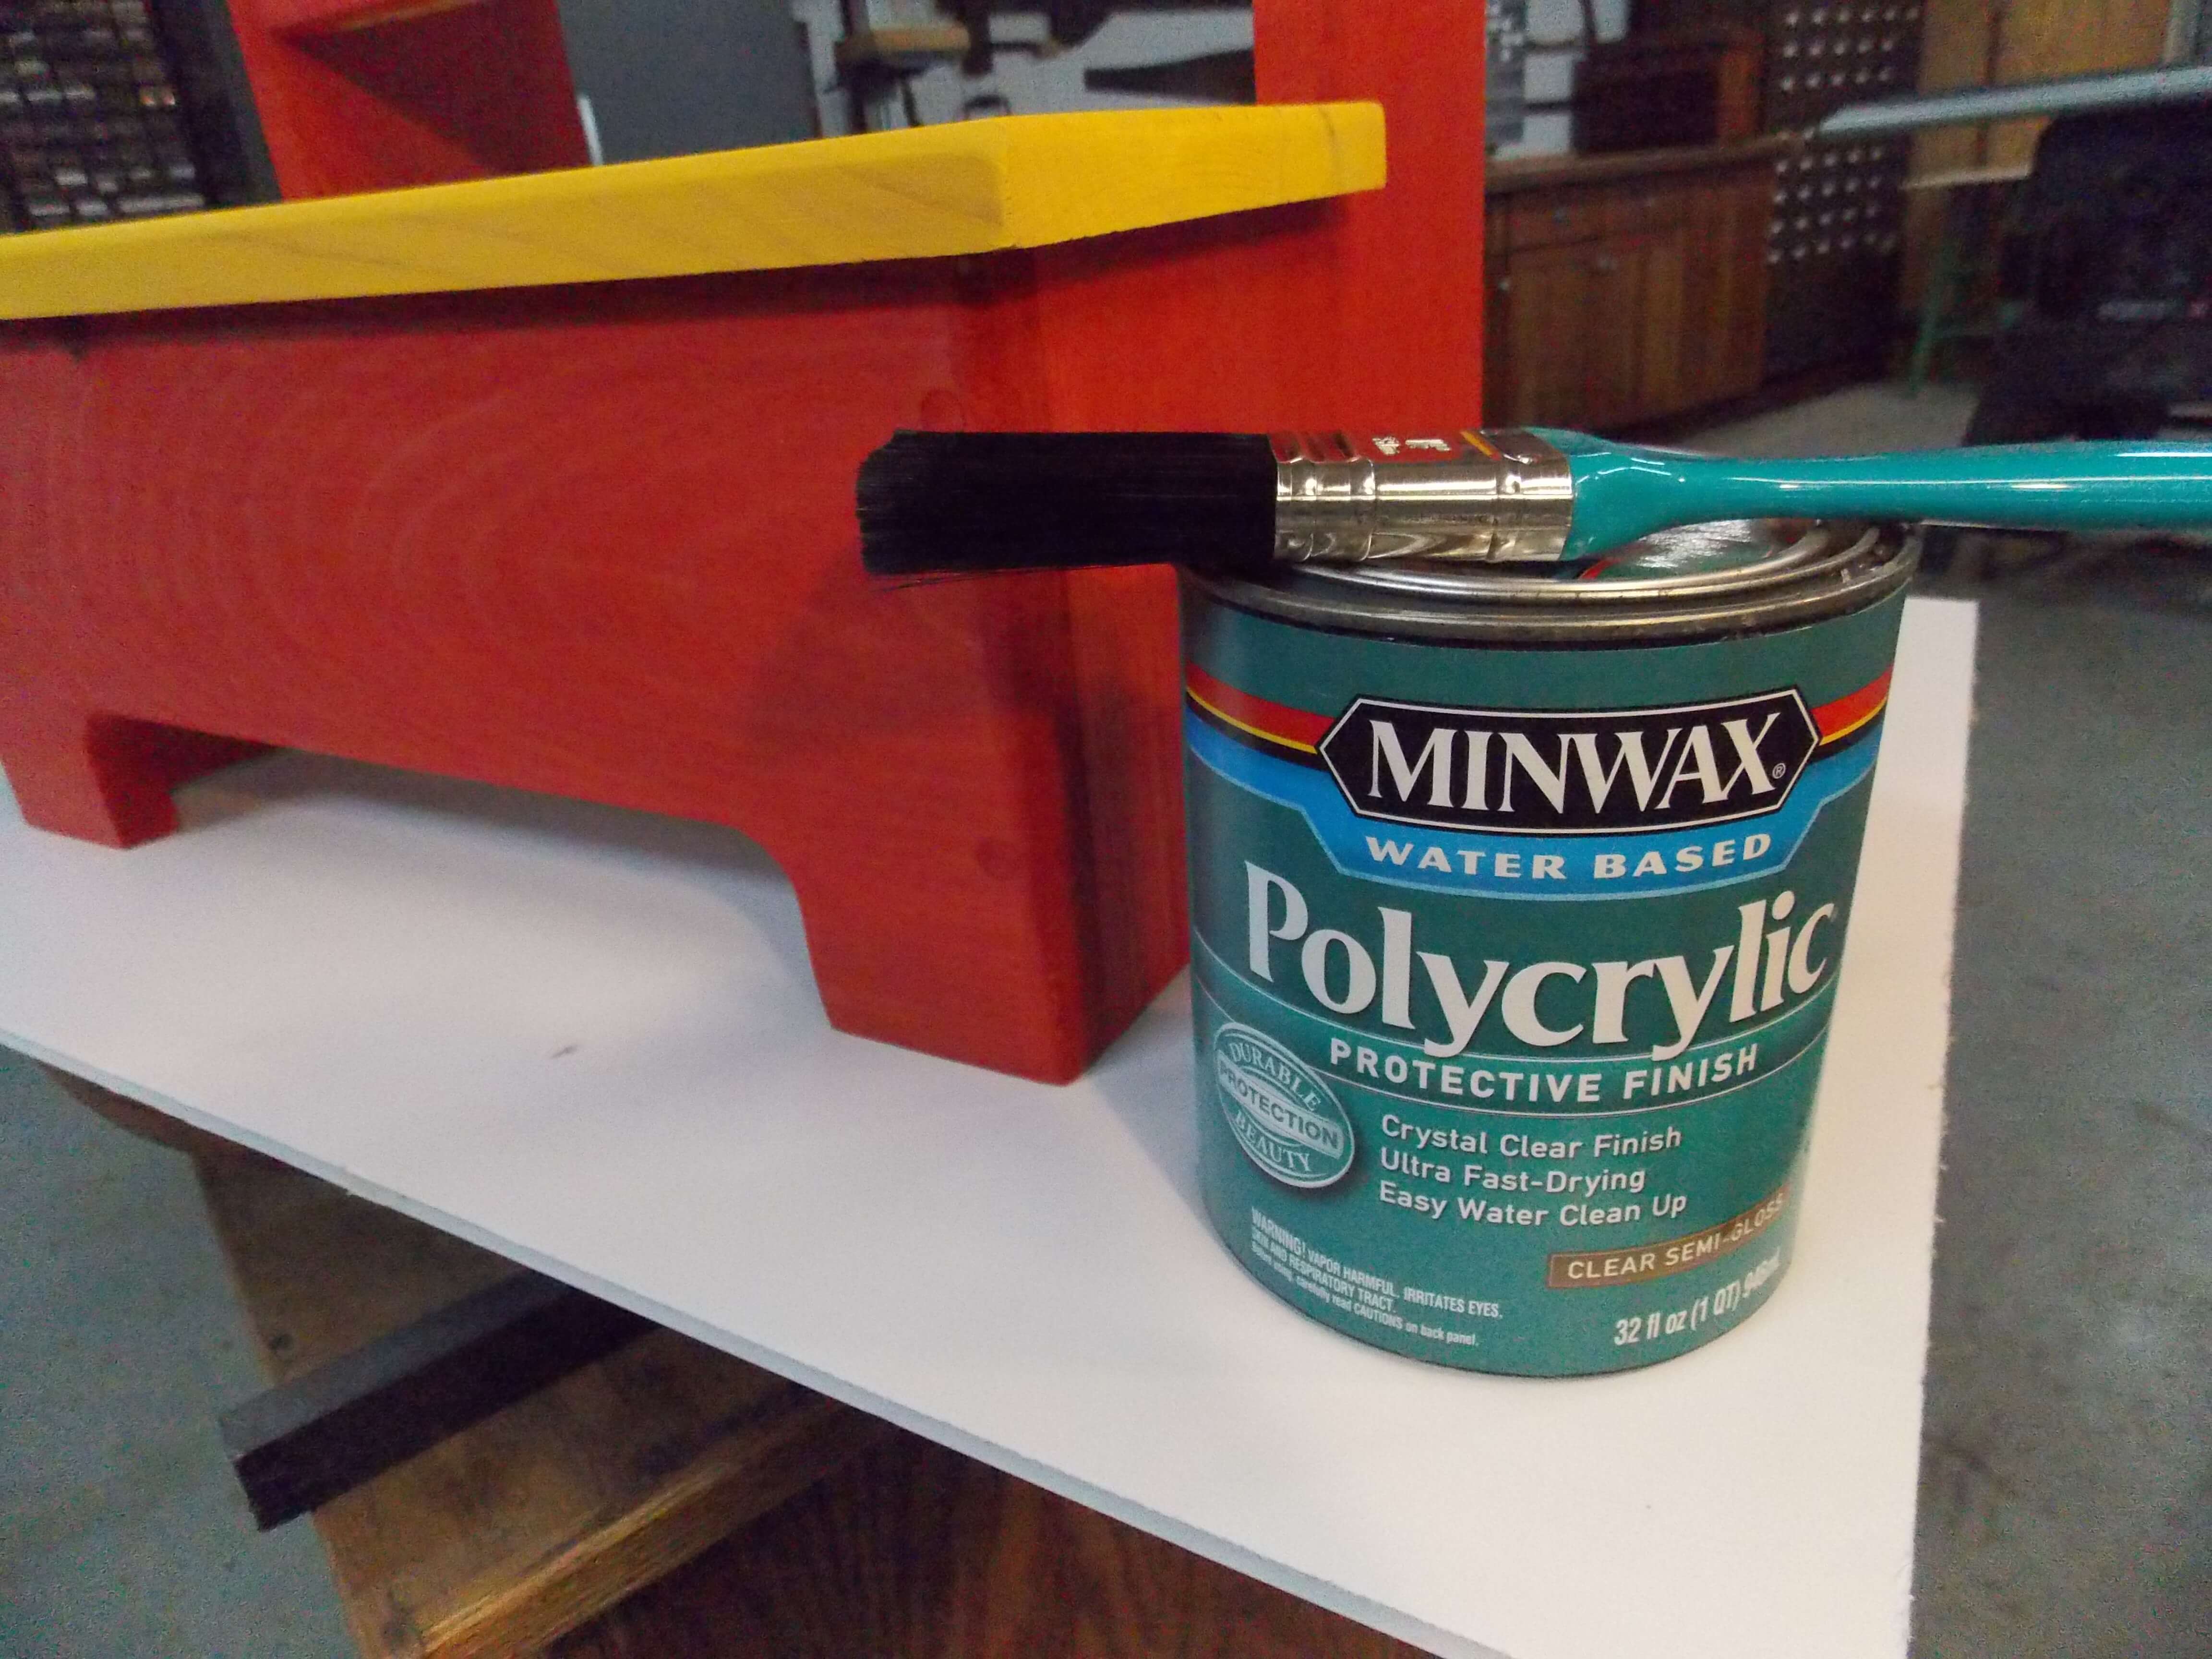 Minwax Polycrylic Protective Wood Finish Alongside Colorful Step Stool